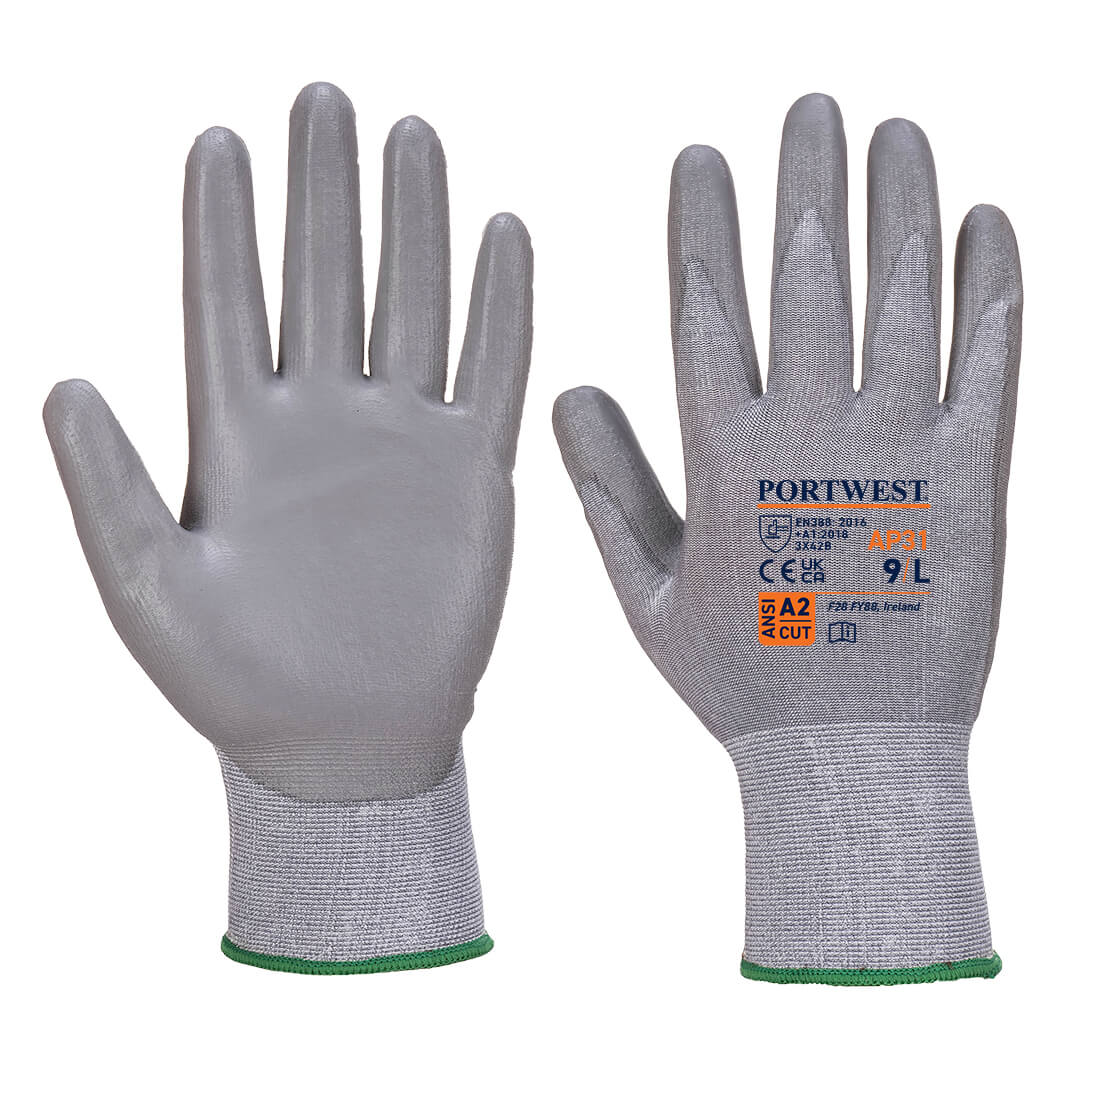 AP52 Portwest® Senti Cut Lite Work Gloves with PU palm coating